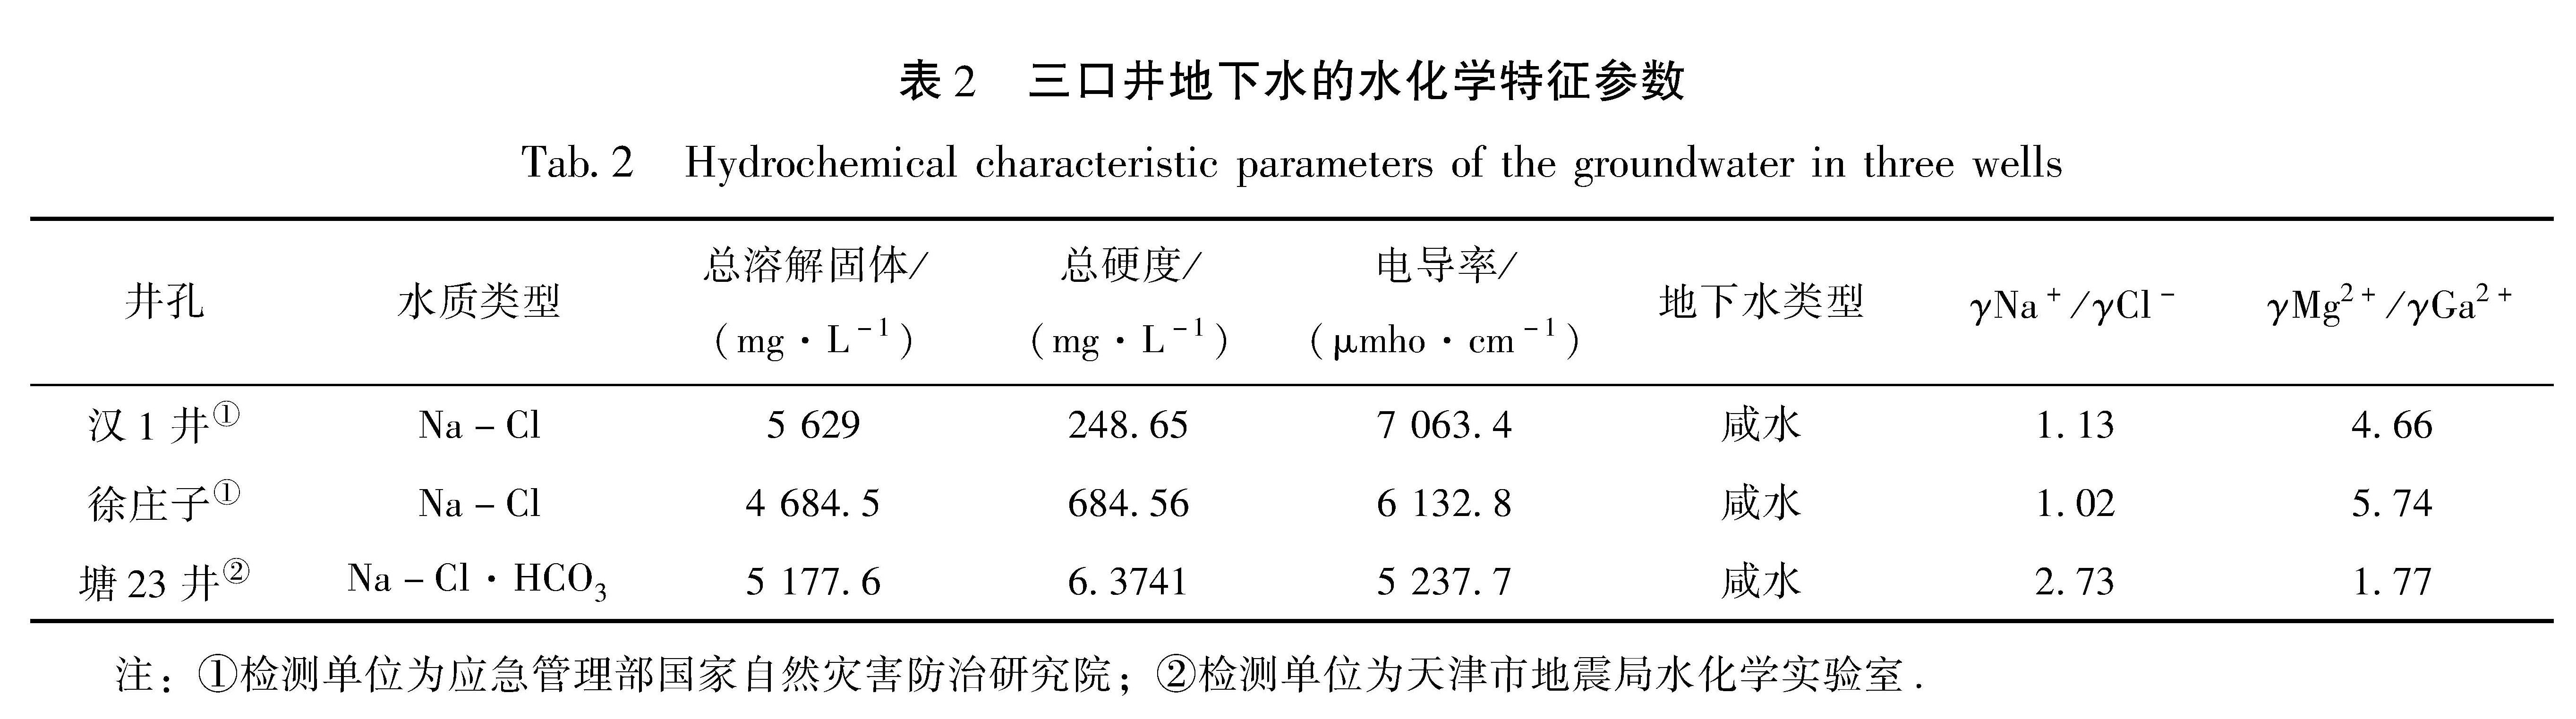 表2 三口井地下水的水化学特征参数<br/>Tab.2 Hydrochemical characteristic parameters of the groundwater in three wells